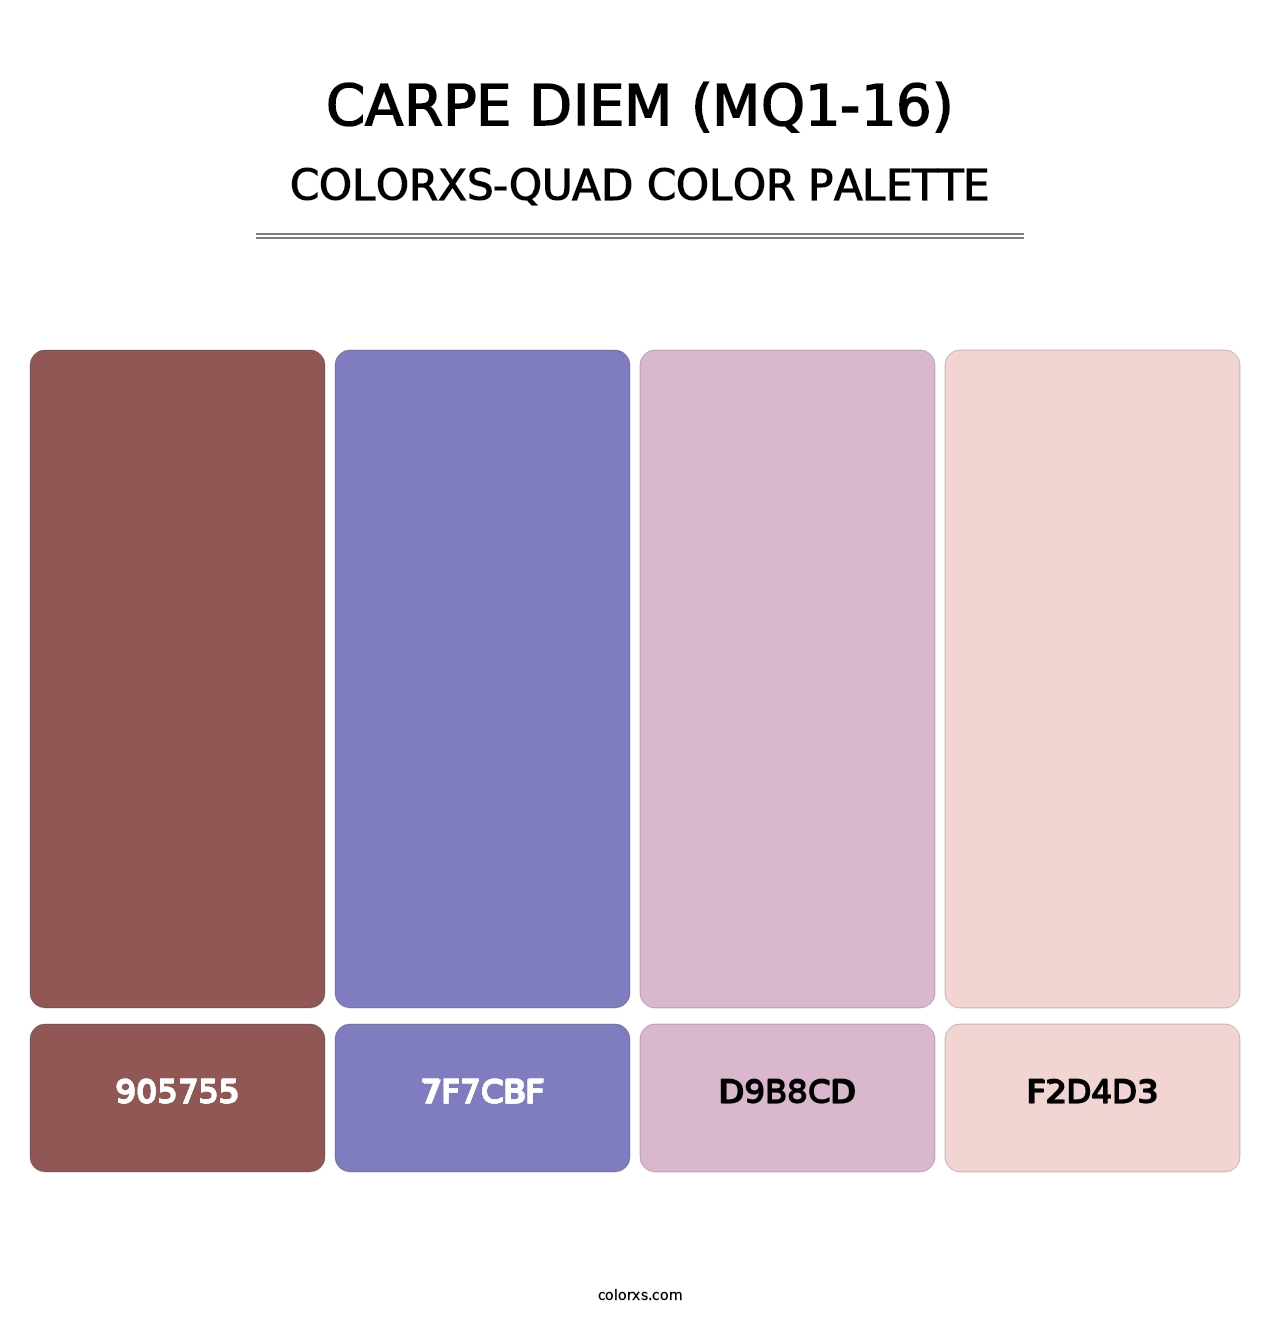 Carpe Diem (MQ1-16) - Colorxs Quad Palette